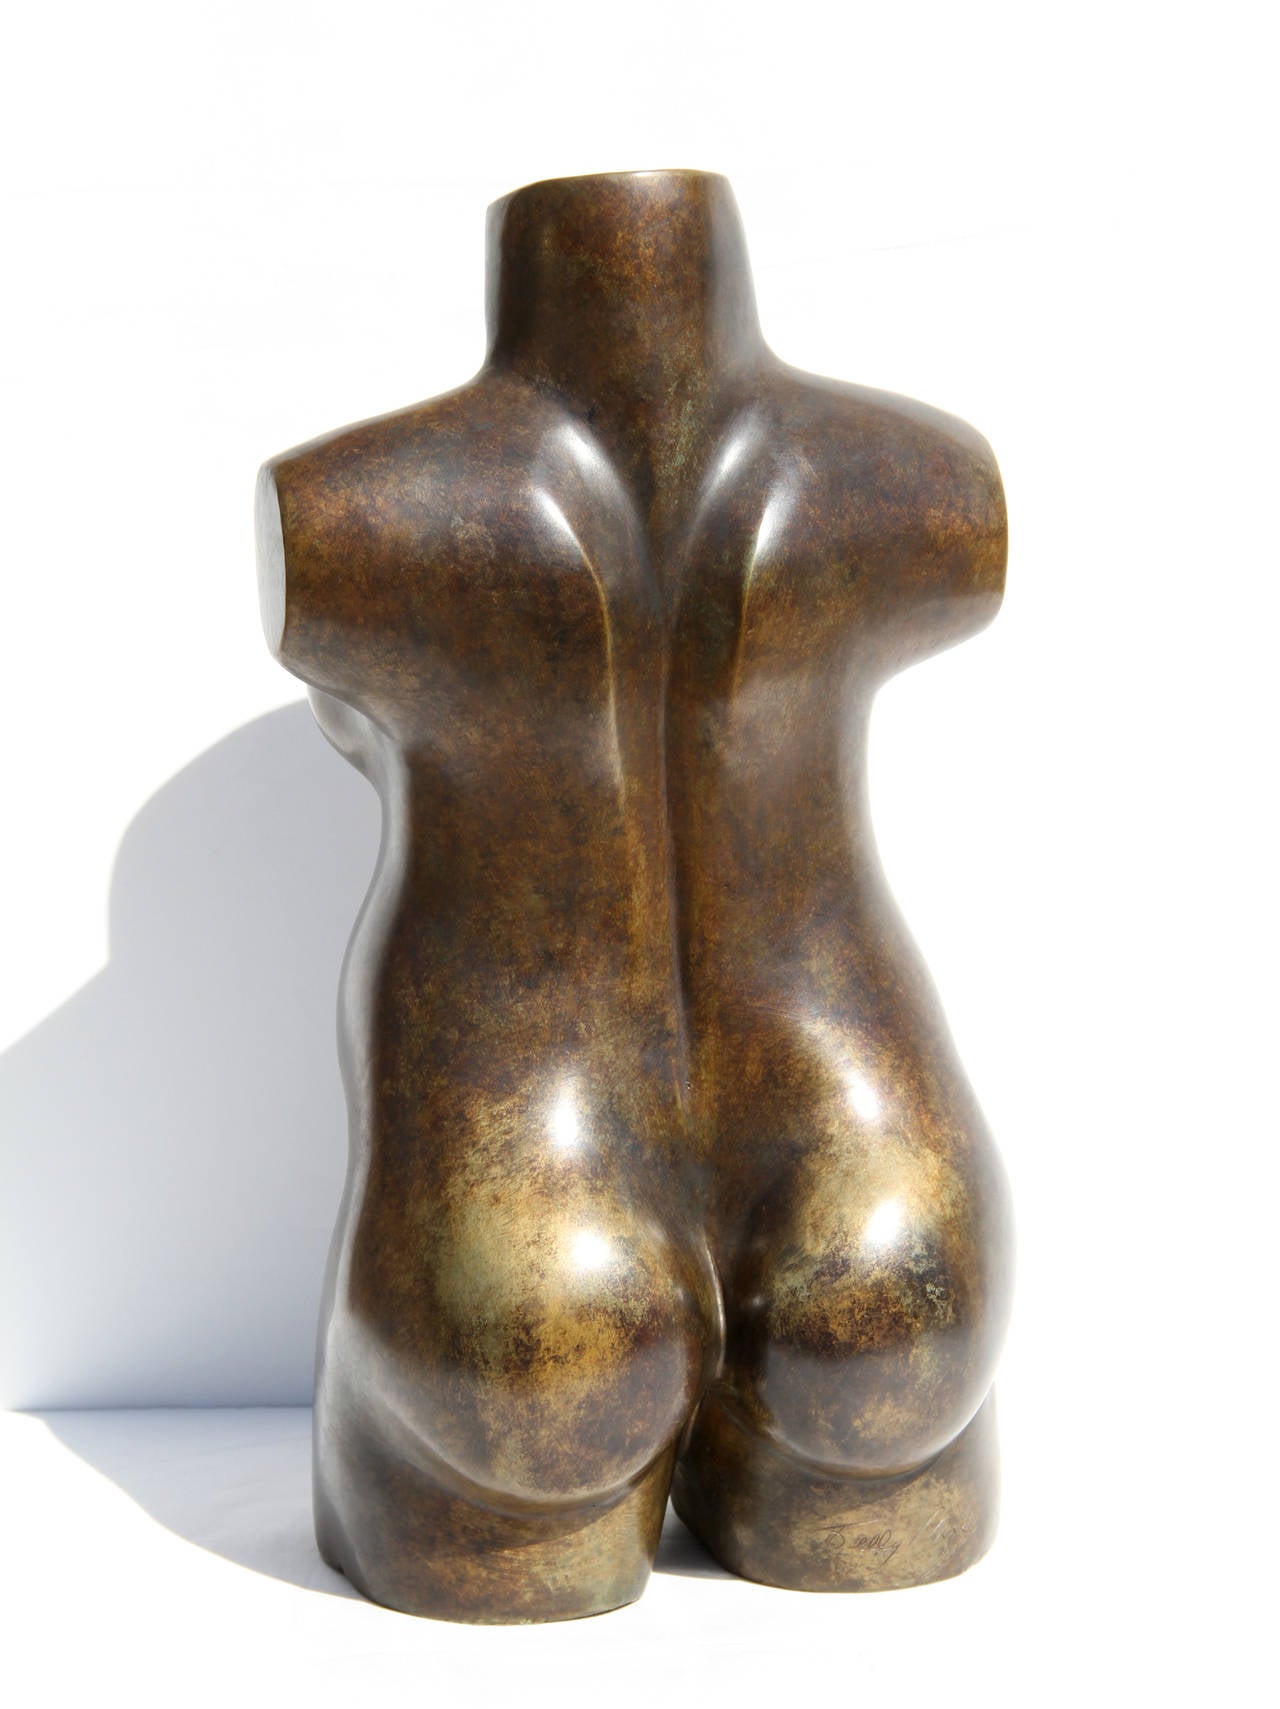 Artist: Telly Mia
Title: Fertility Venus
Medium: Bronze Sculpture, signature inscribed
Size: 20 in. x 11 in. x 10 in. (50.8 cm x 27.94 cm x 25.4 cm)